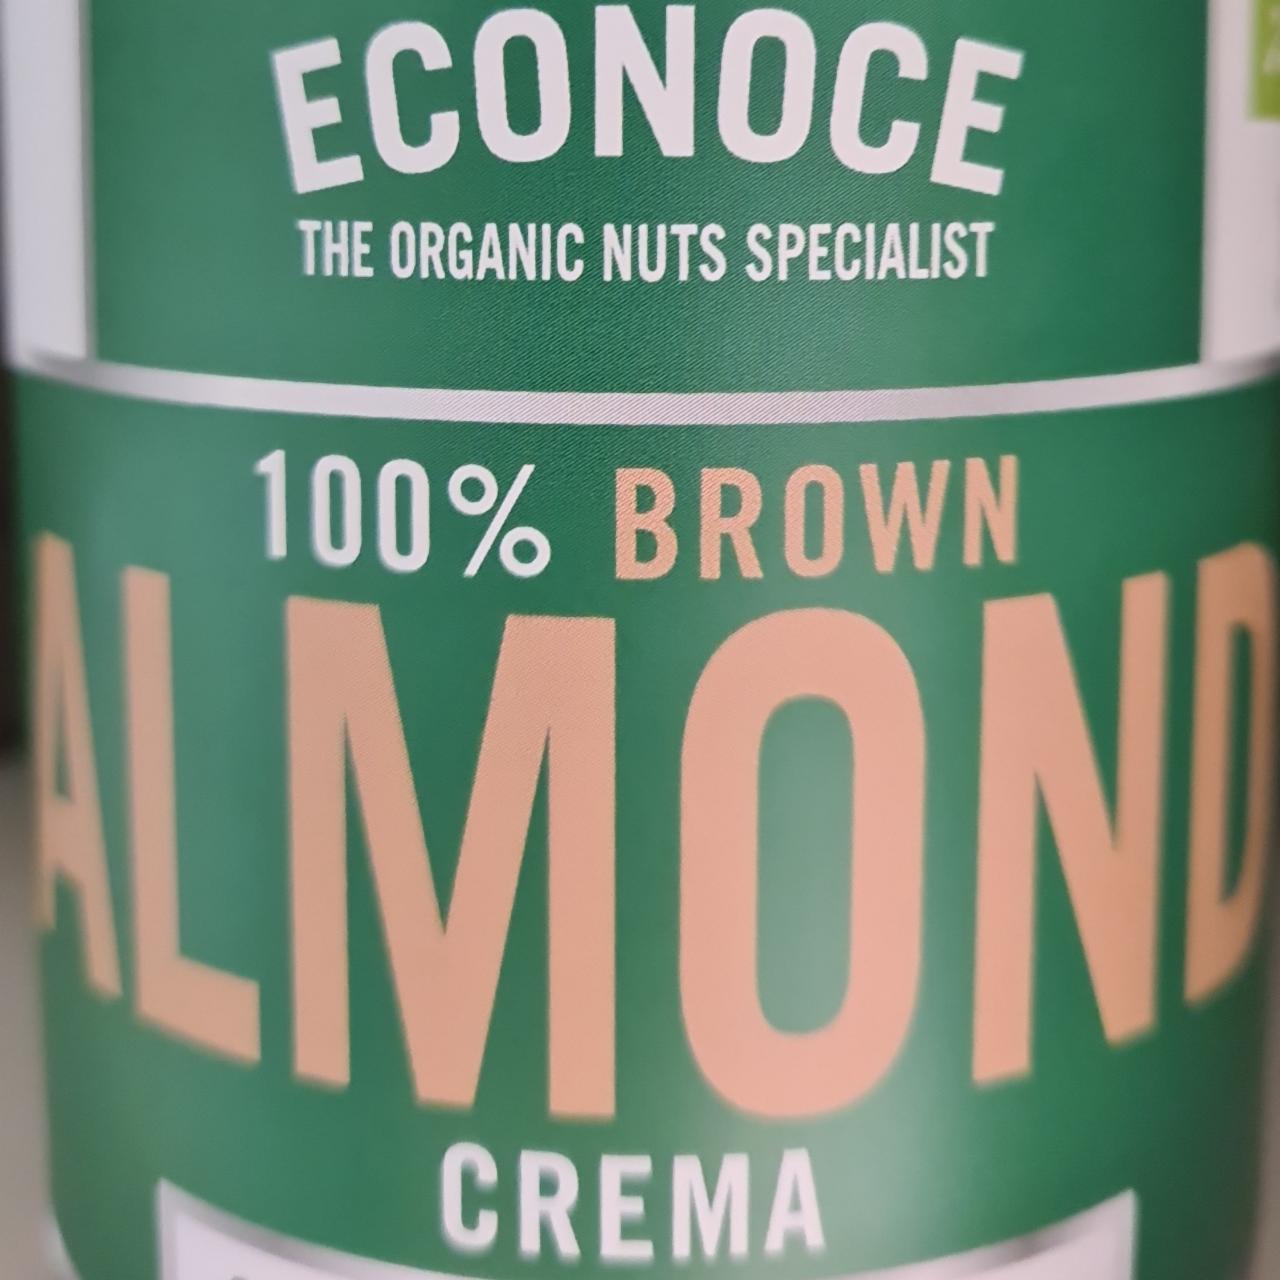 Fotografie - 100% brown almond crema almond butter Econoce